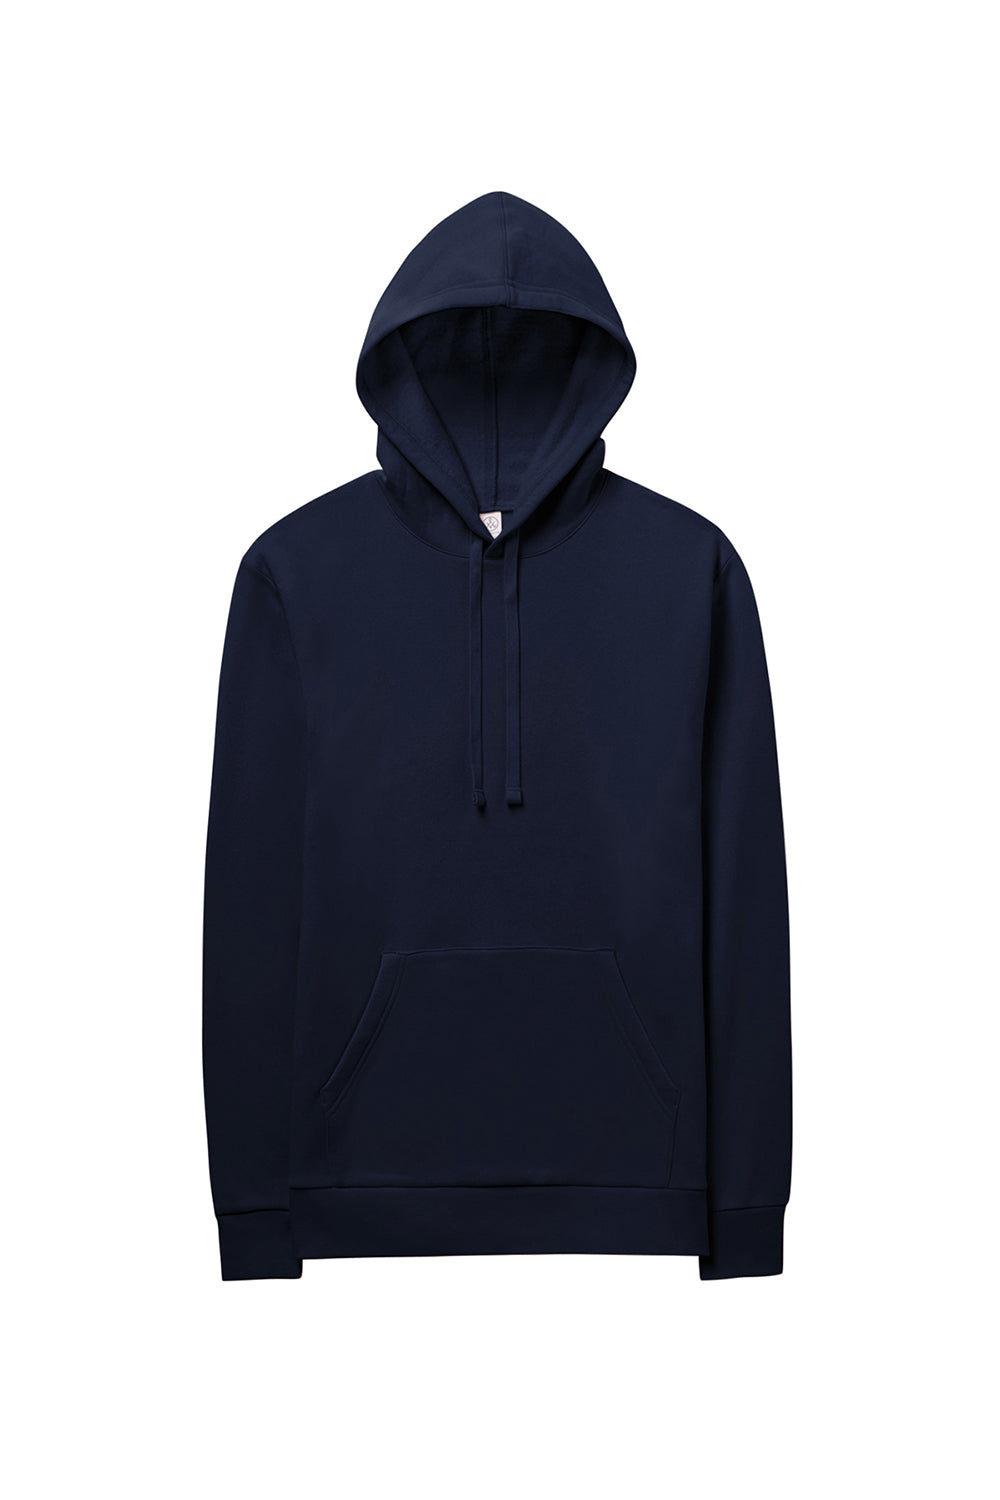 Alternative 8804PF Mens Eco Cozy Fleece Hooded Sweatshirt Hoodie Midnight Navy Blue Flat Front